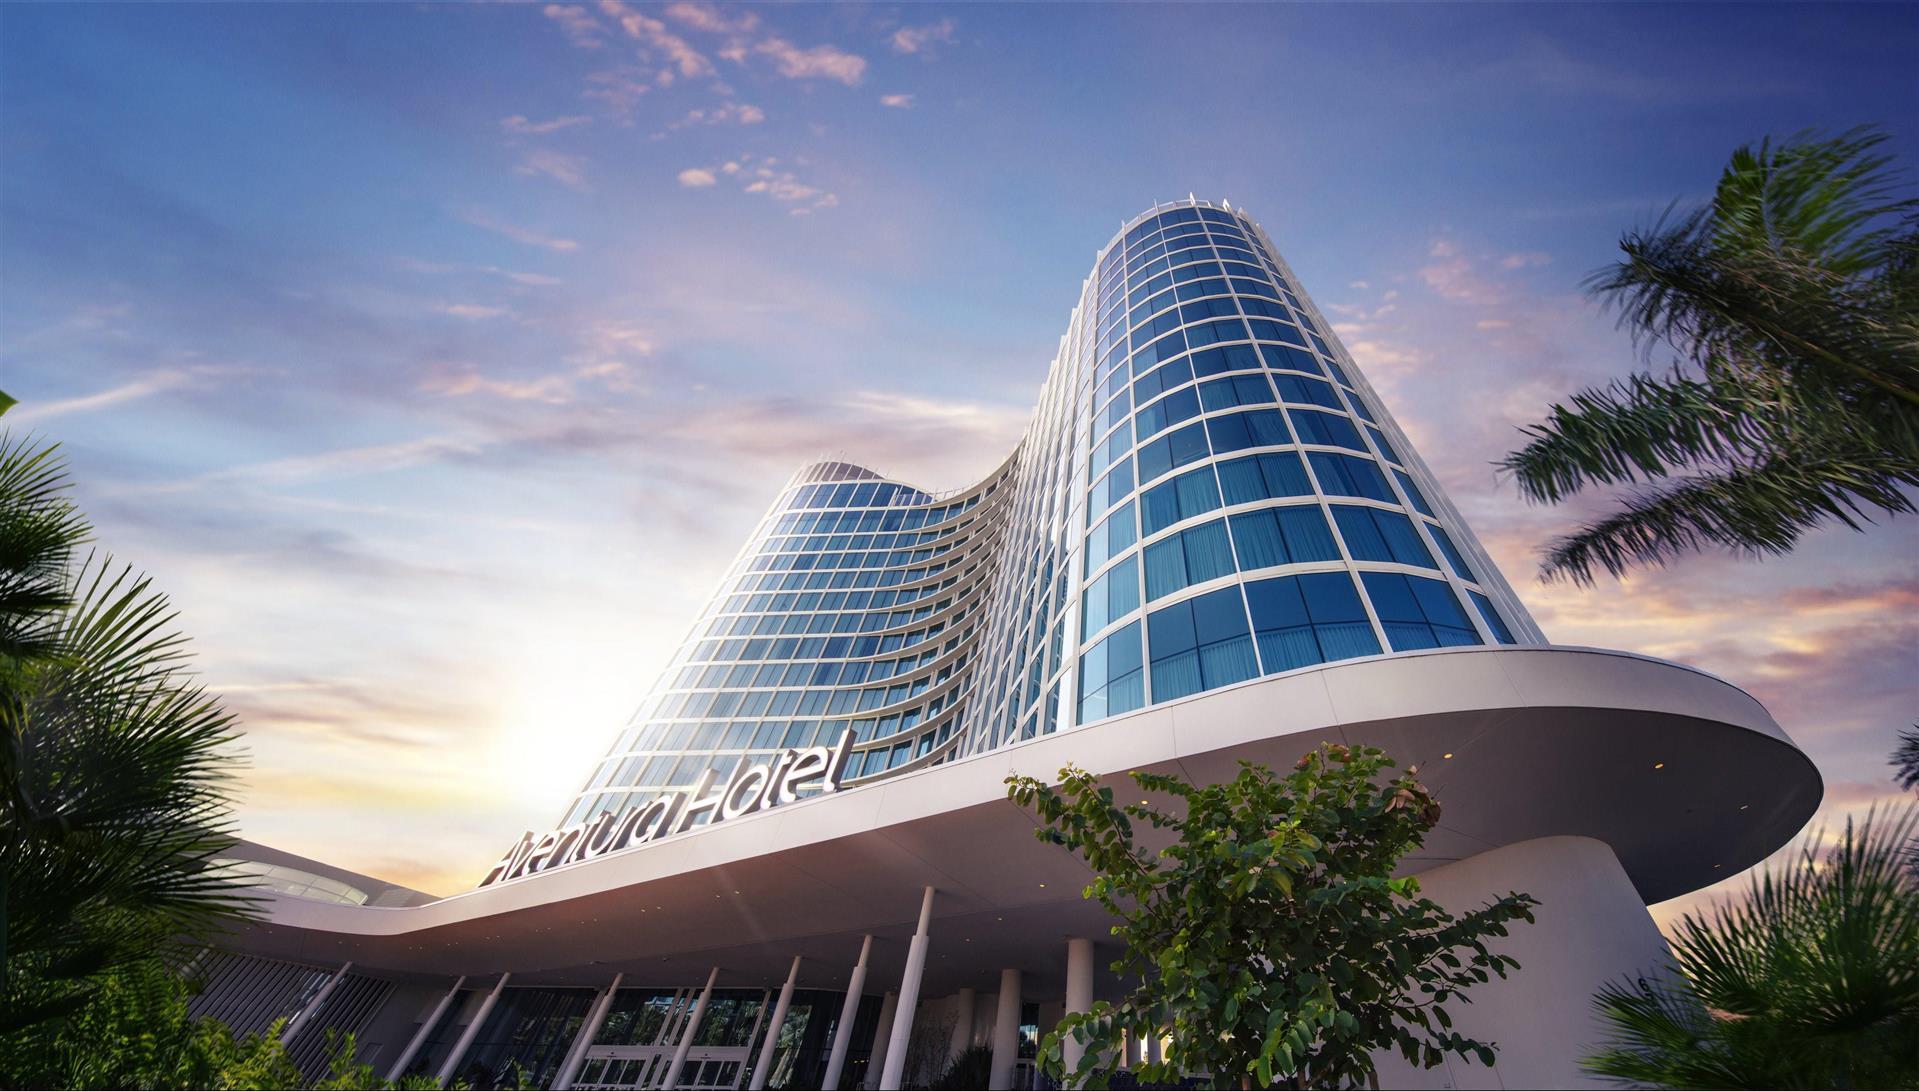 Universal’s Aventura Hotel in Orlando, FL